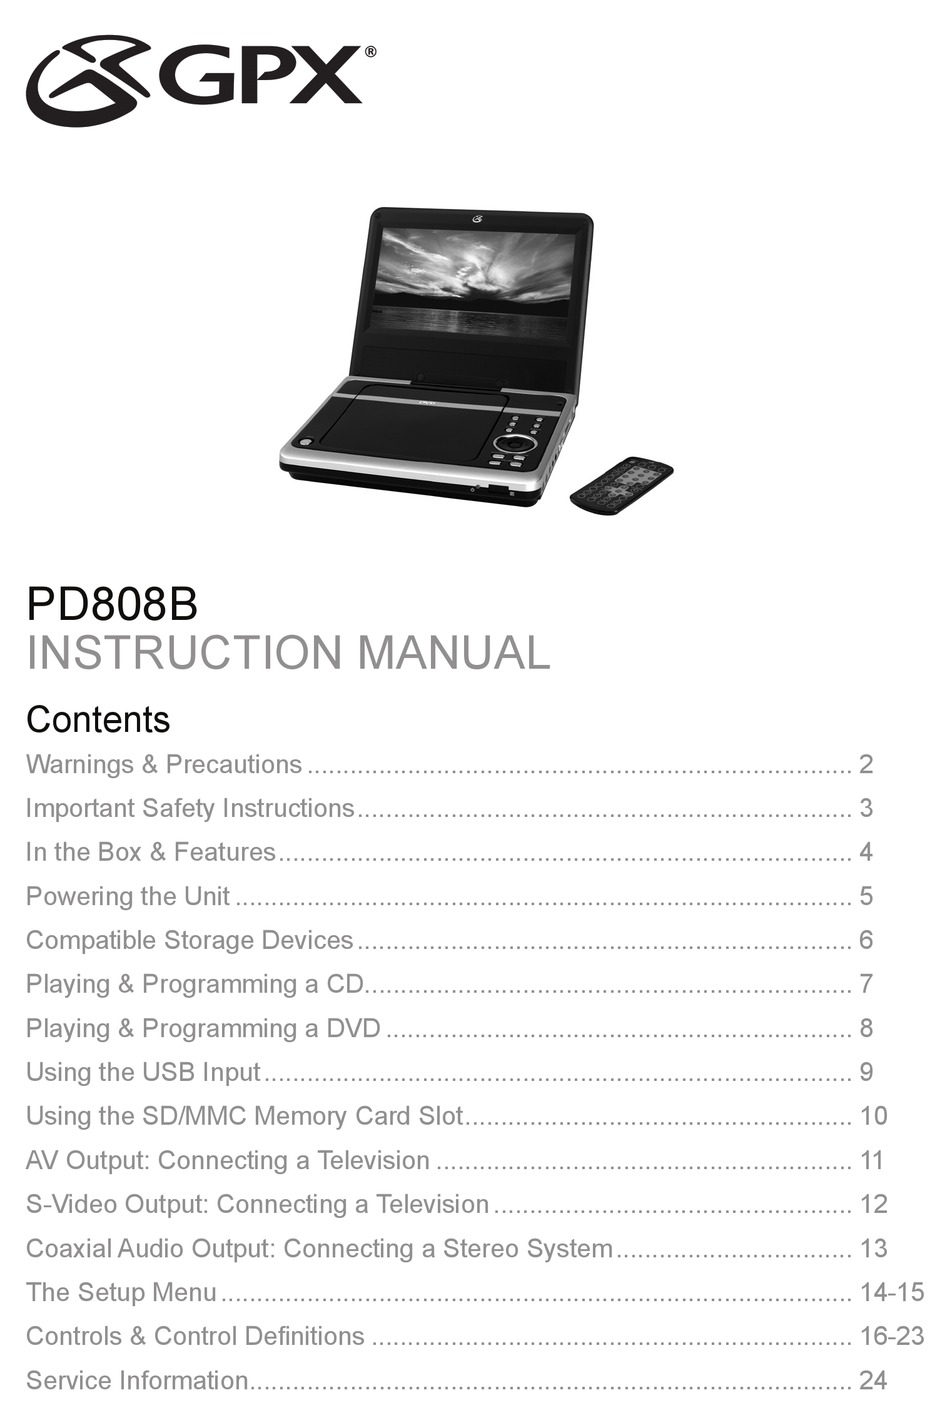 digitech gsp5 manual pdf free download